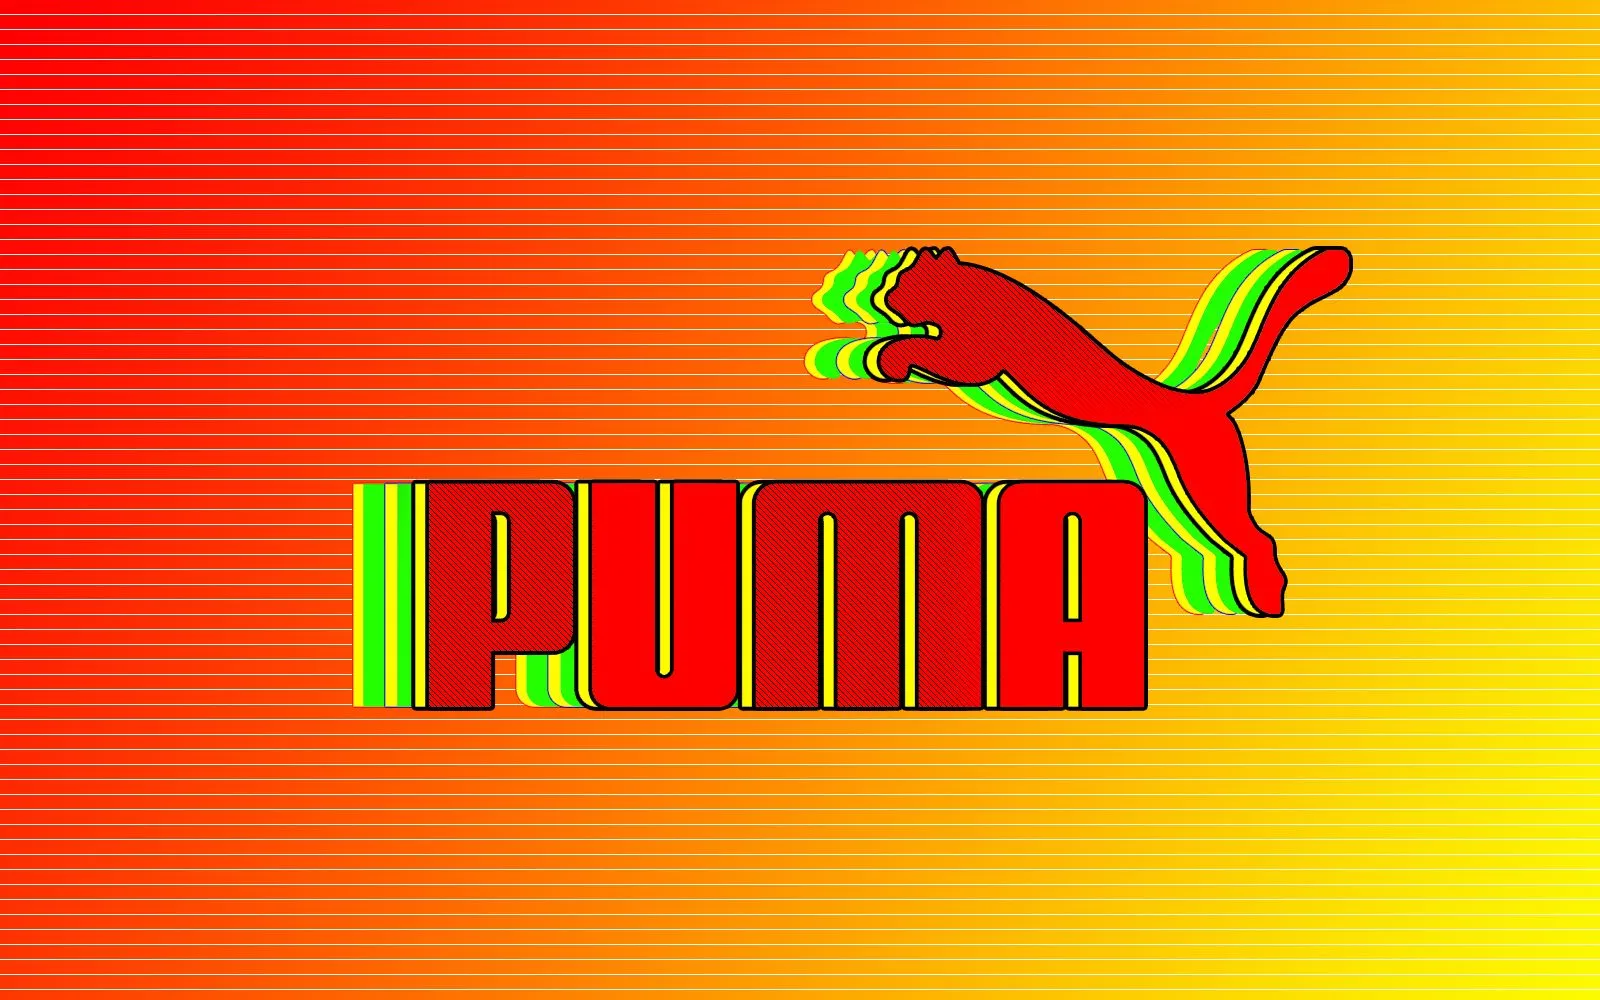 Puma Logo by wytzelangen on DeviantArt